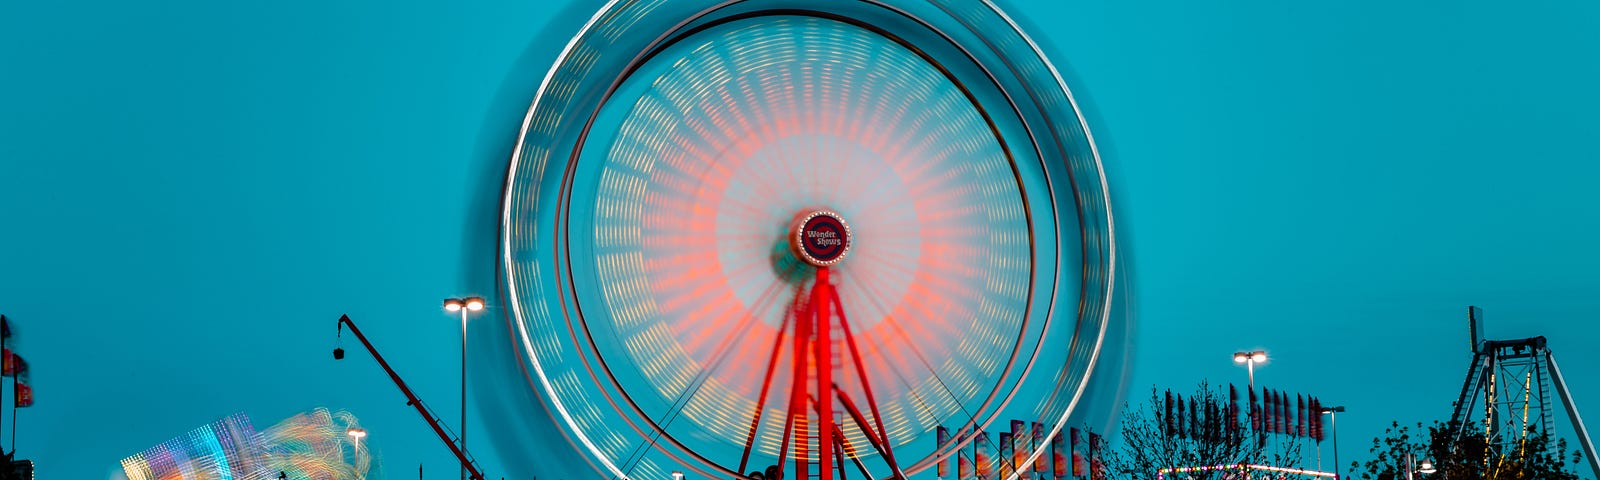 A spinning Ferris wheel